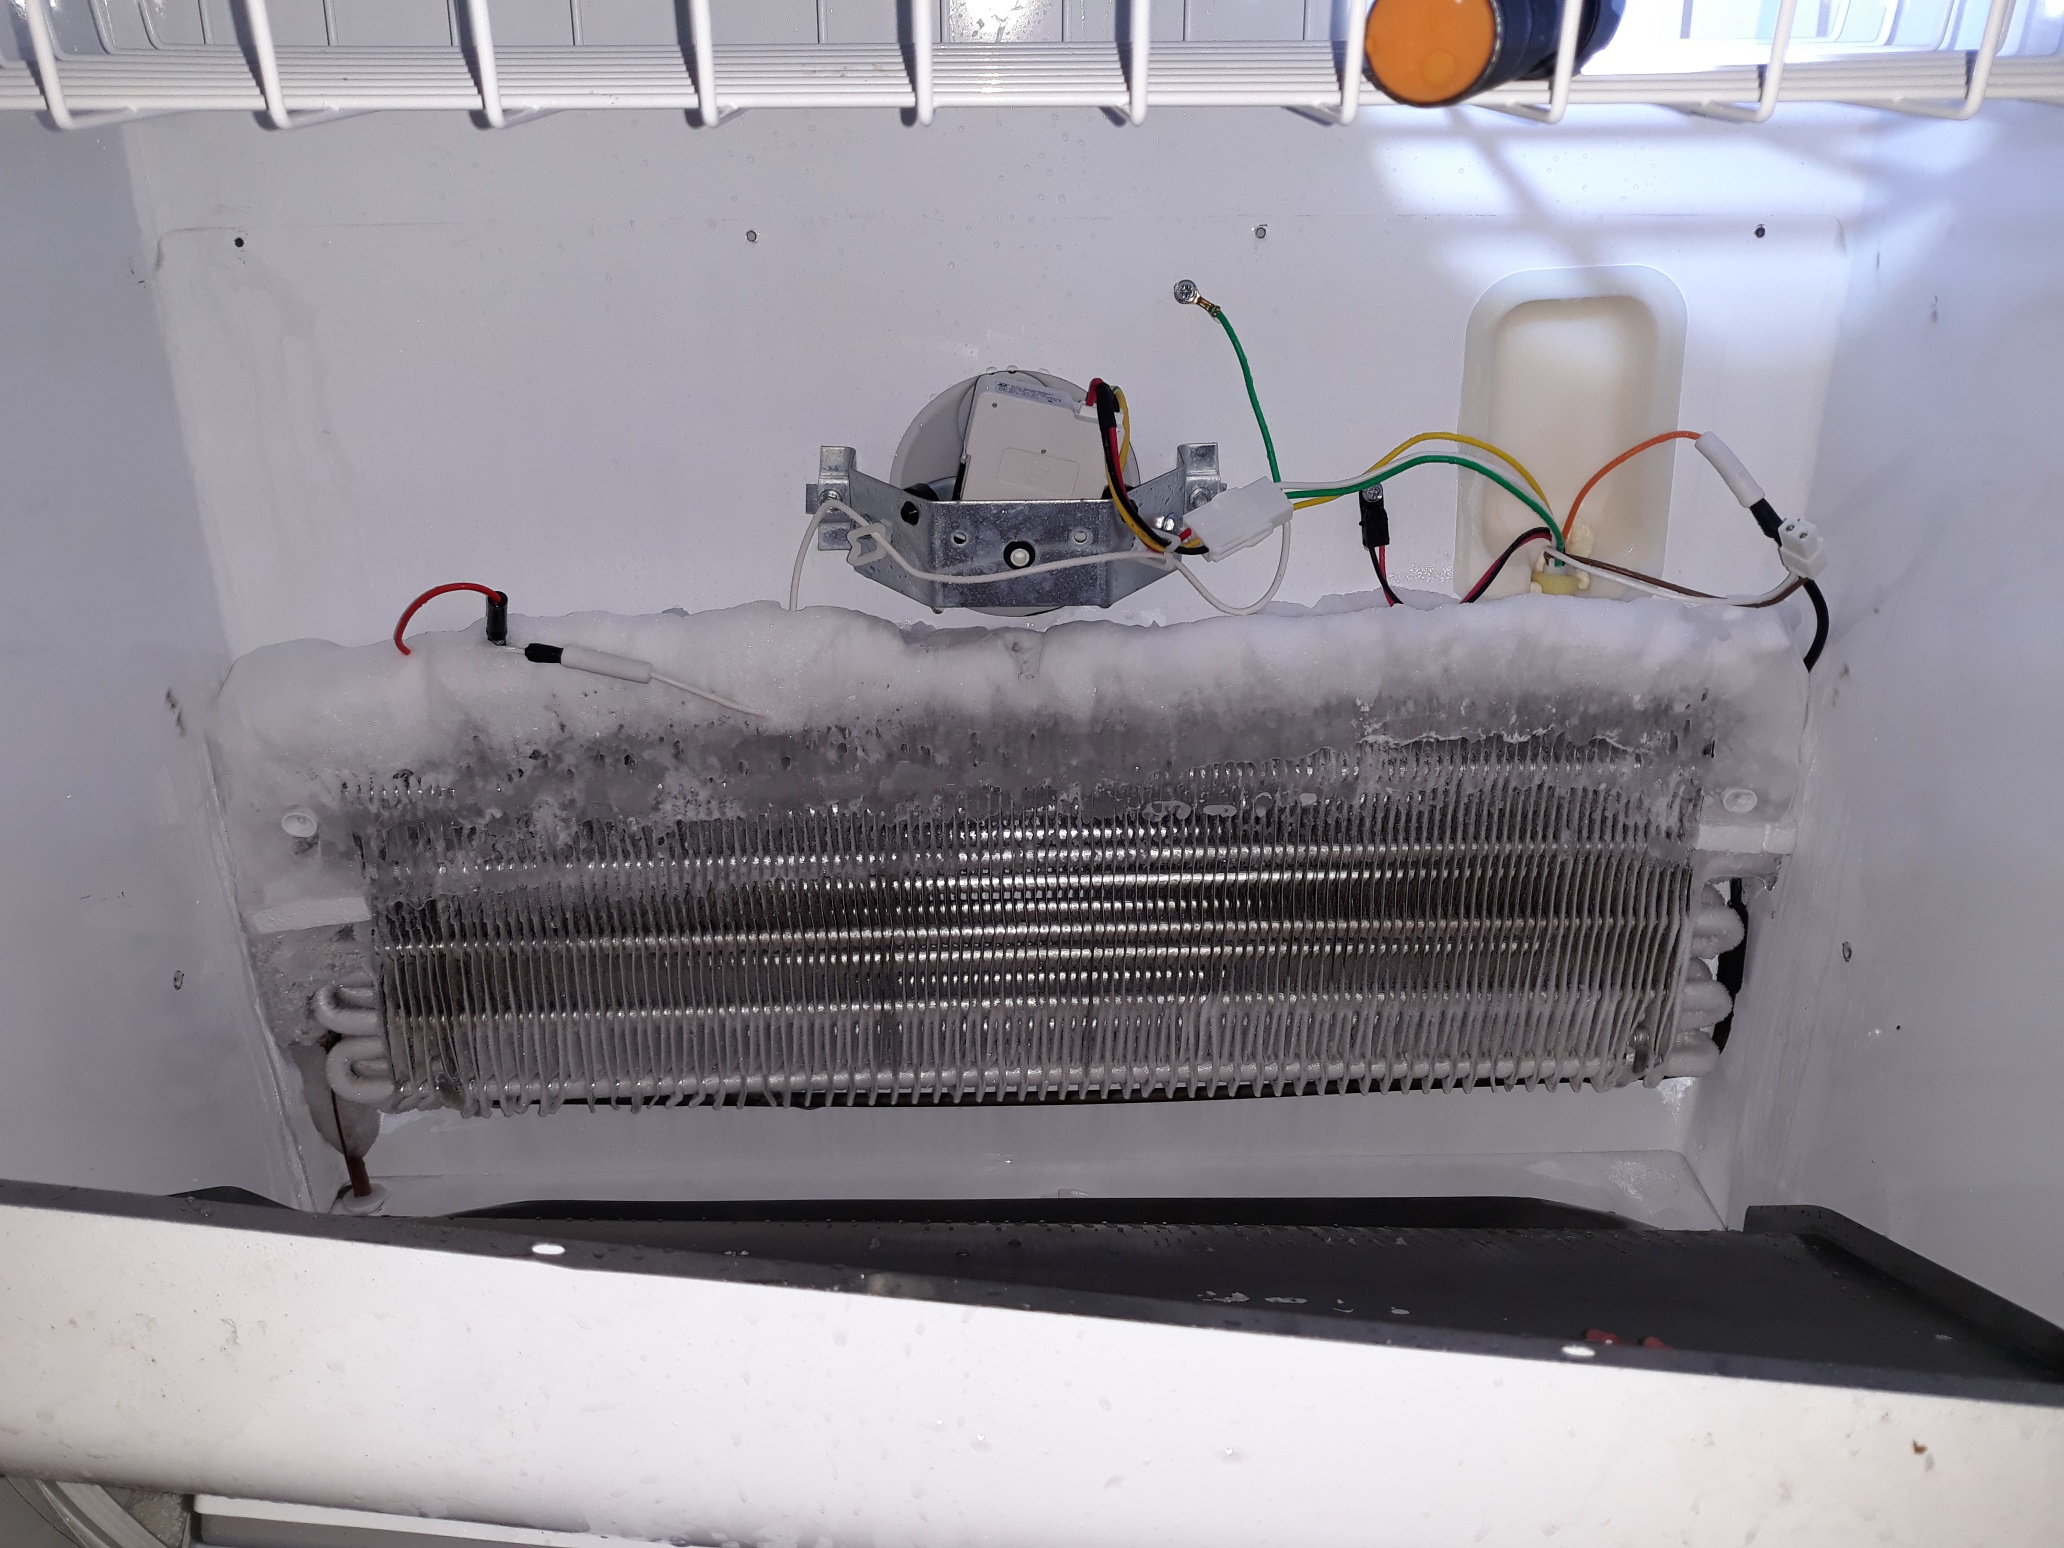 appliance repair refrigerator repair defrosting of the evaporator coil causing a restriction manhattan dr pine castle fl 32839